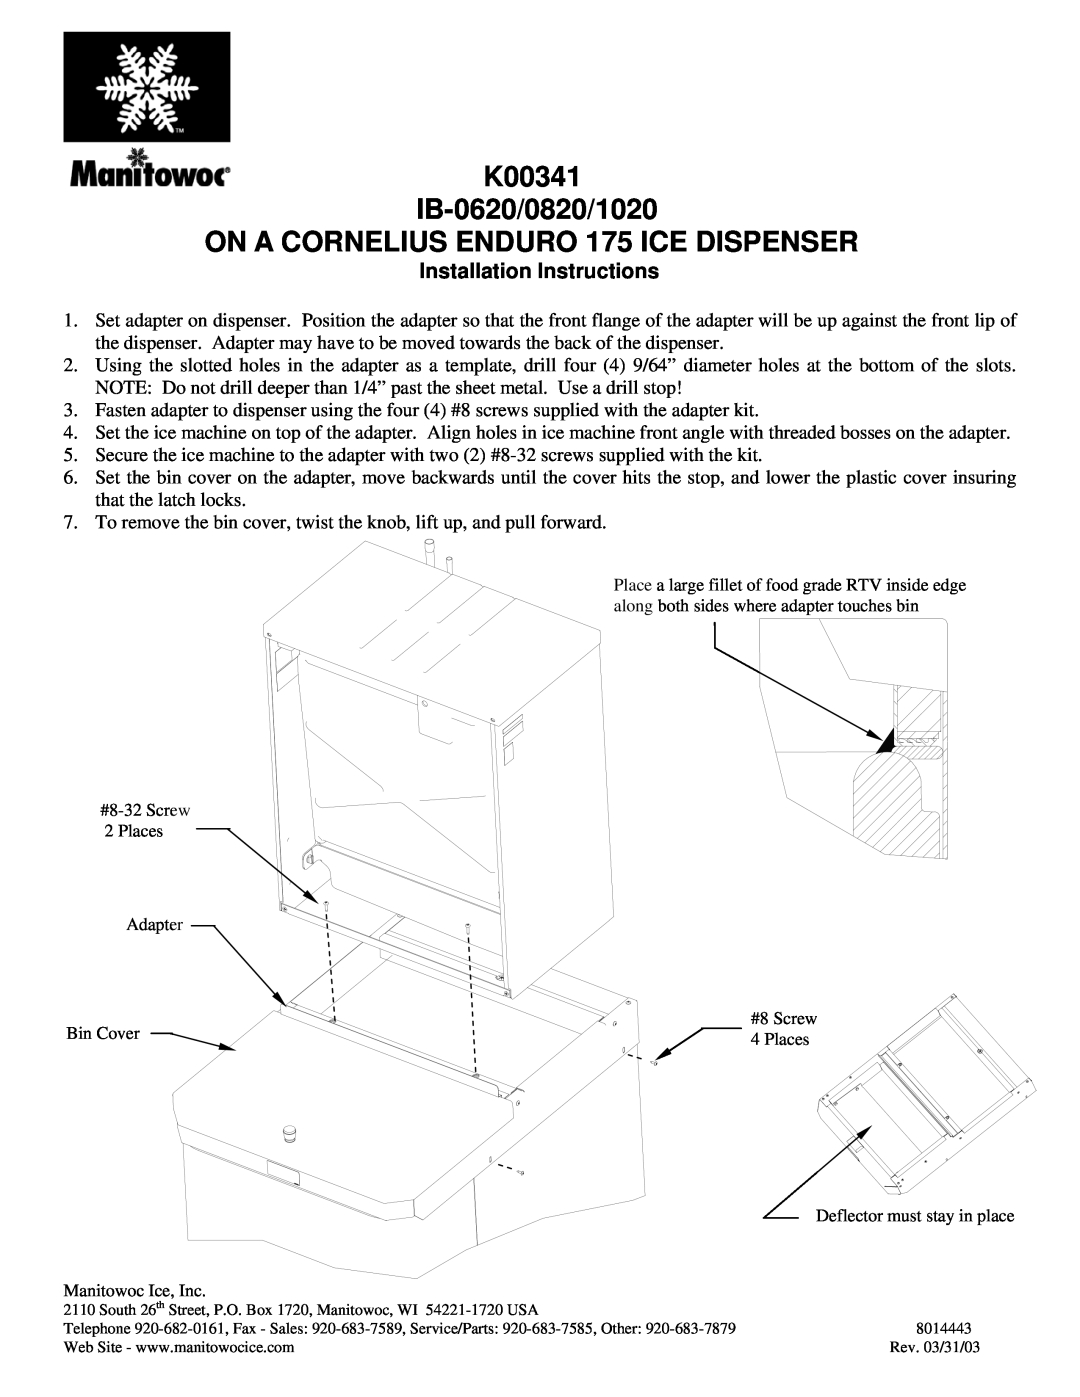 Manitowoc Ice installation instructions K00341 IB-0620/0820/1020, ON A CORNELIUS ENDURO 175 ICE DISPENSER 